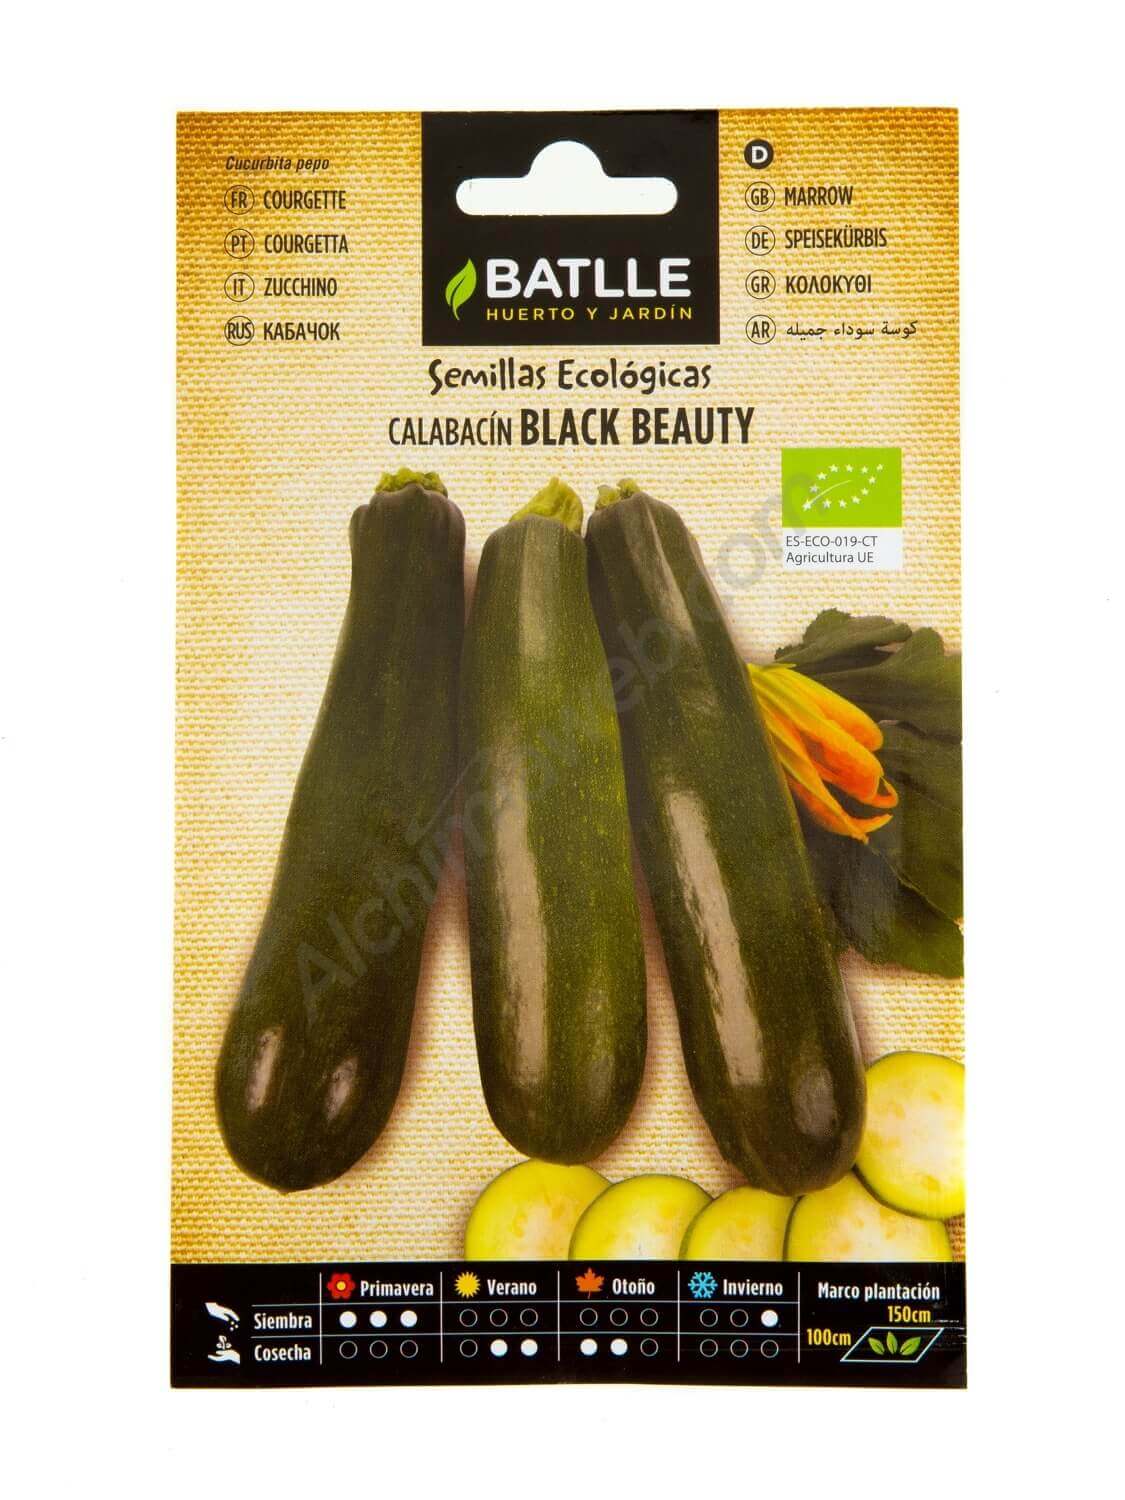 Calabacín Black Beauty ecológico - Batlle